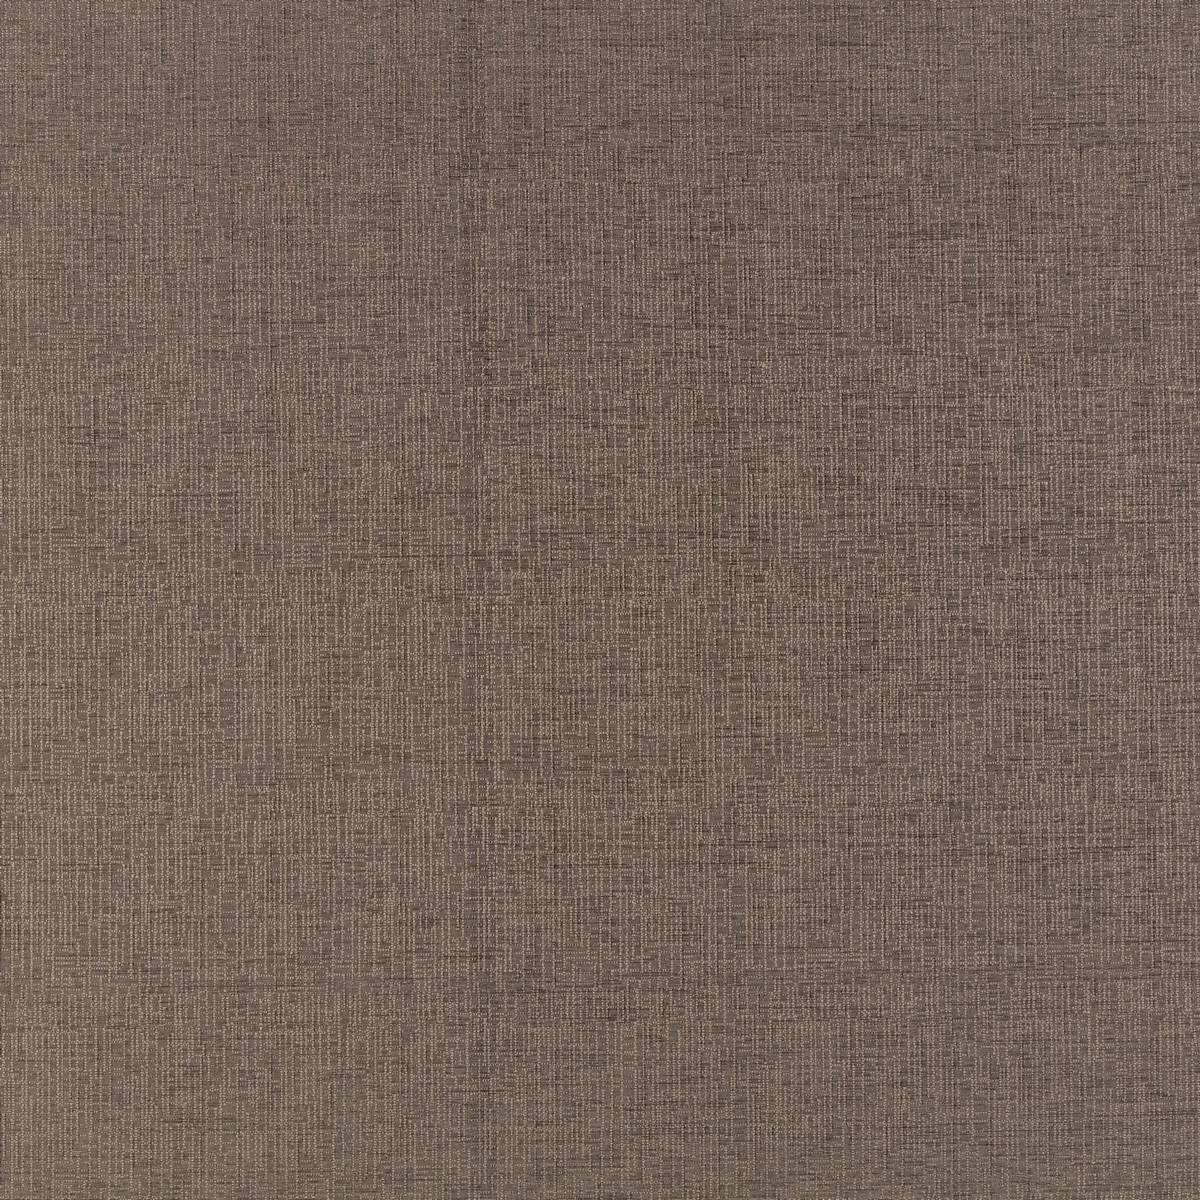 Ashbury Charcoal Fabric by iLiv